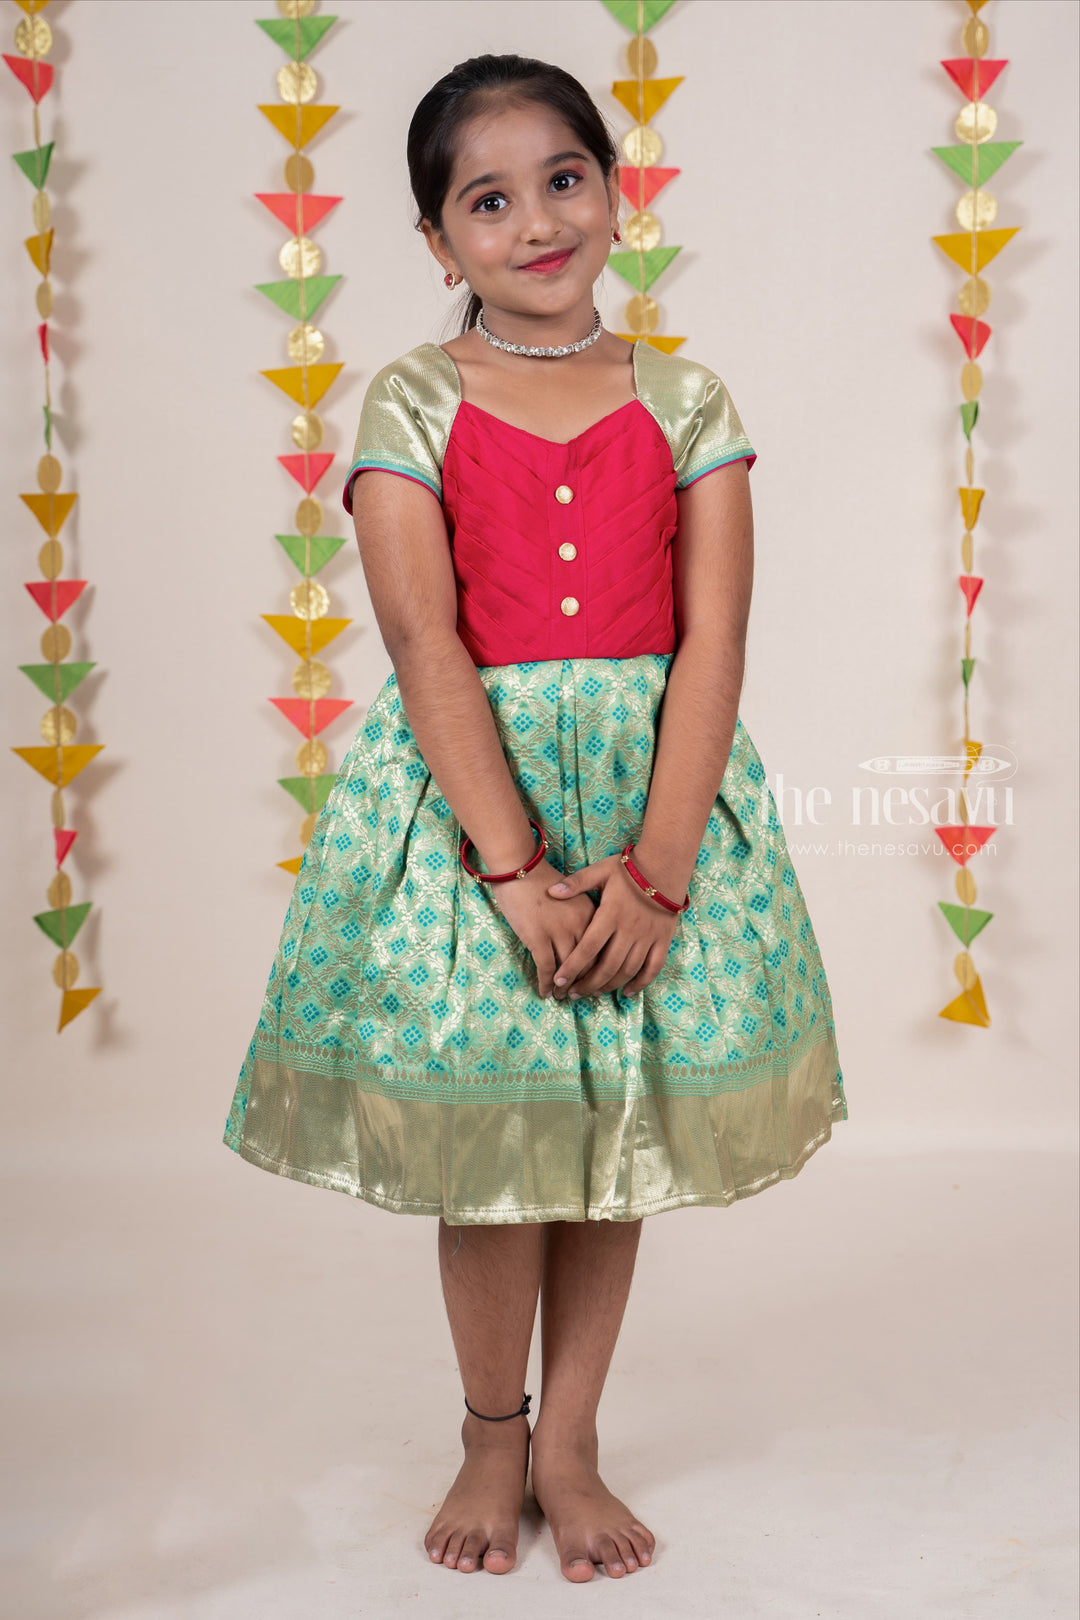 The Nesavu Silk Frocks Limegreen Pleated Yoke Designer Silk Cotton Frock For Baby Girls psr silks Nesavu 14 (6M) / Lightgreen SF423B